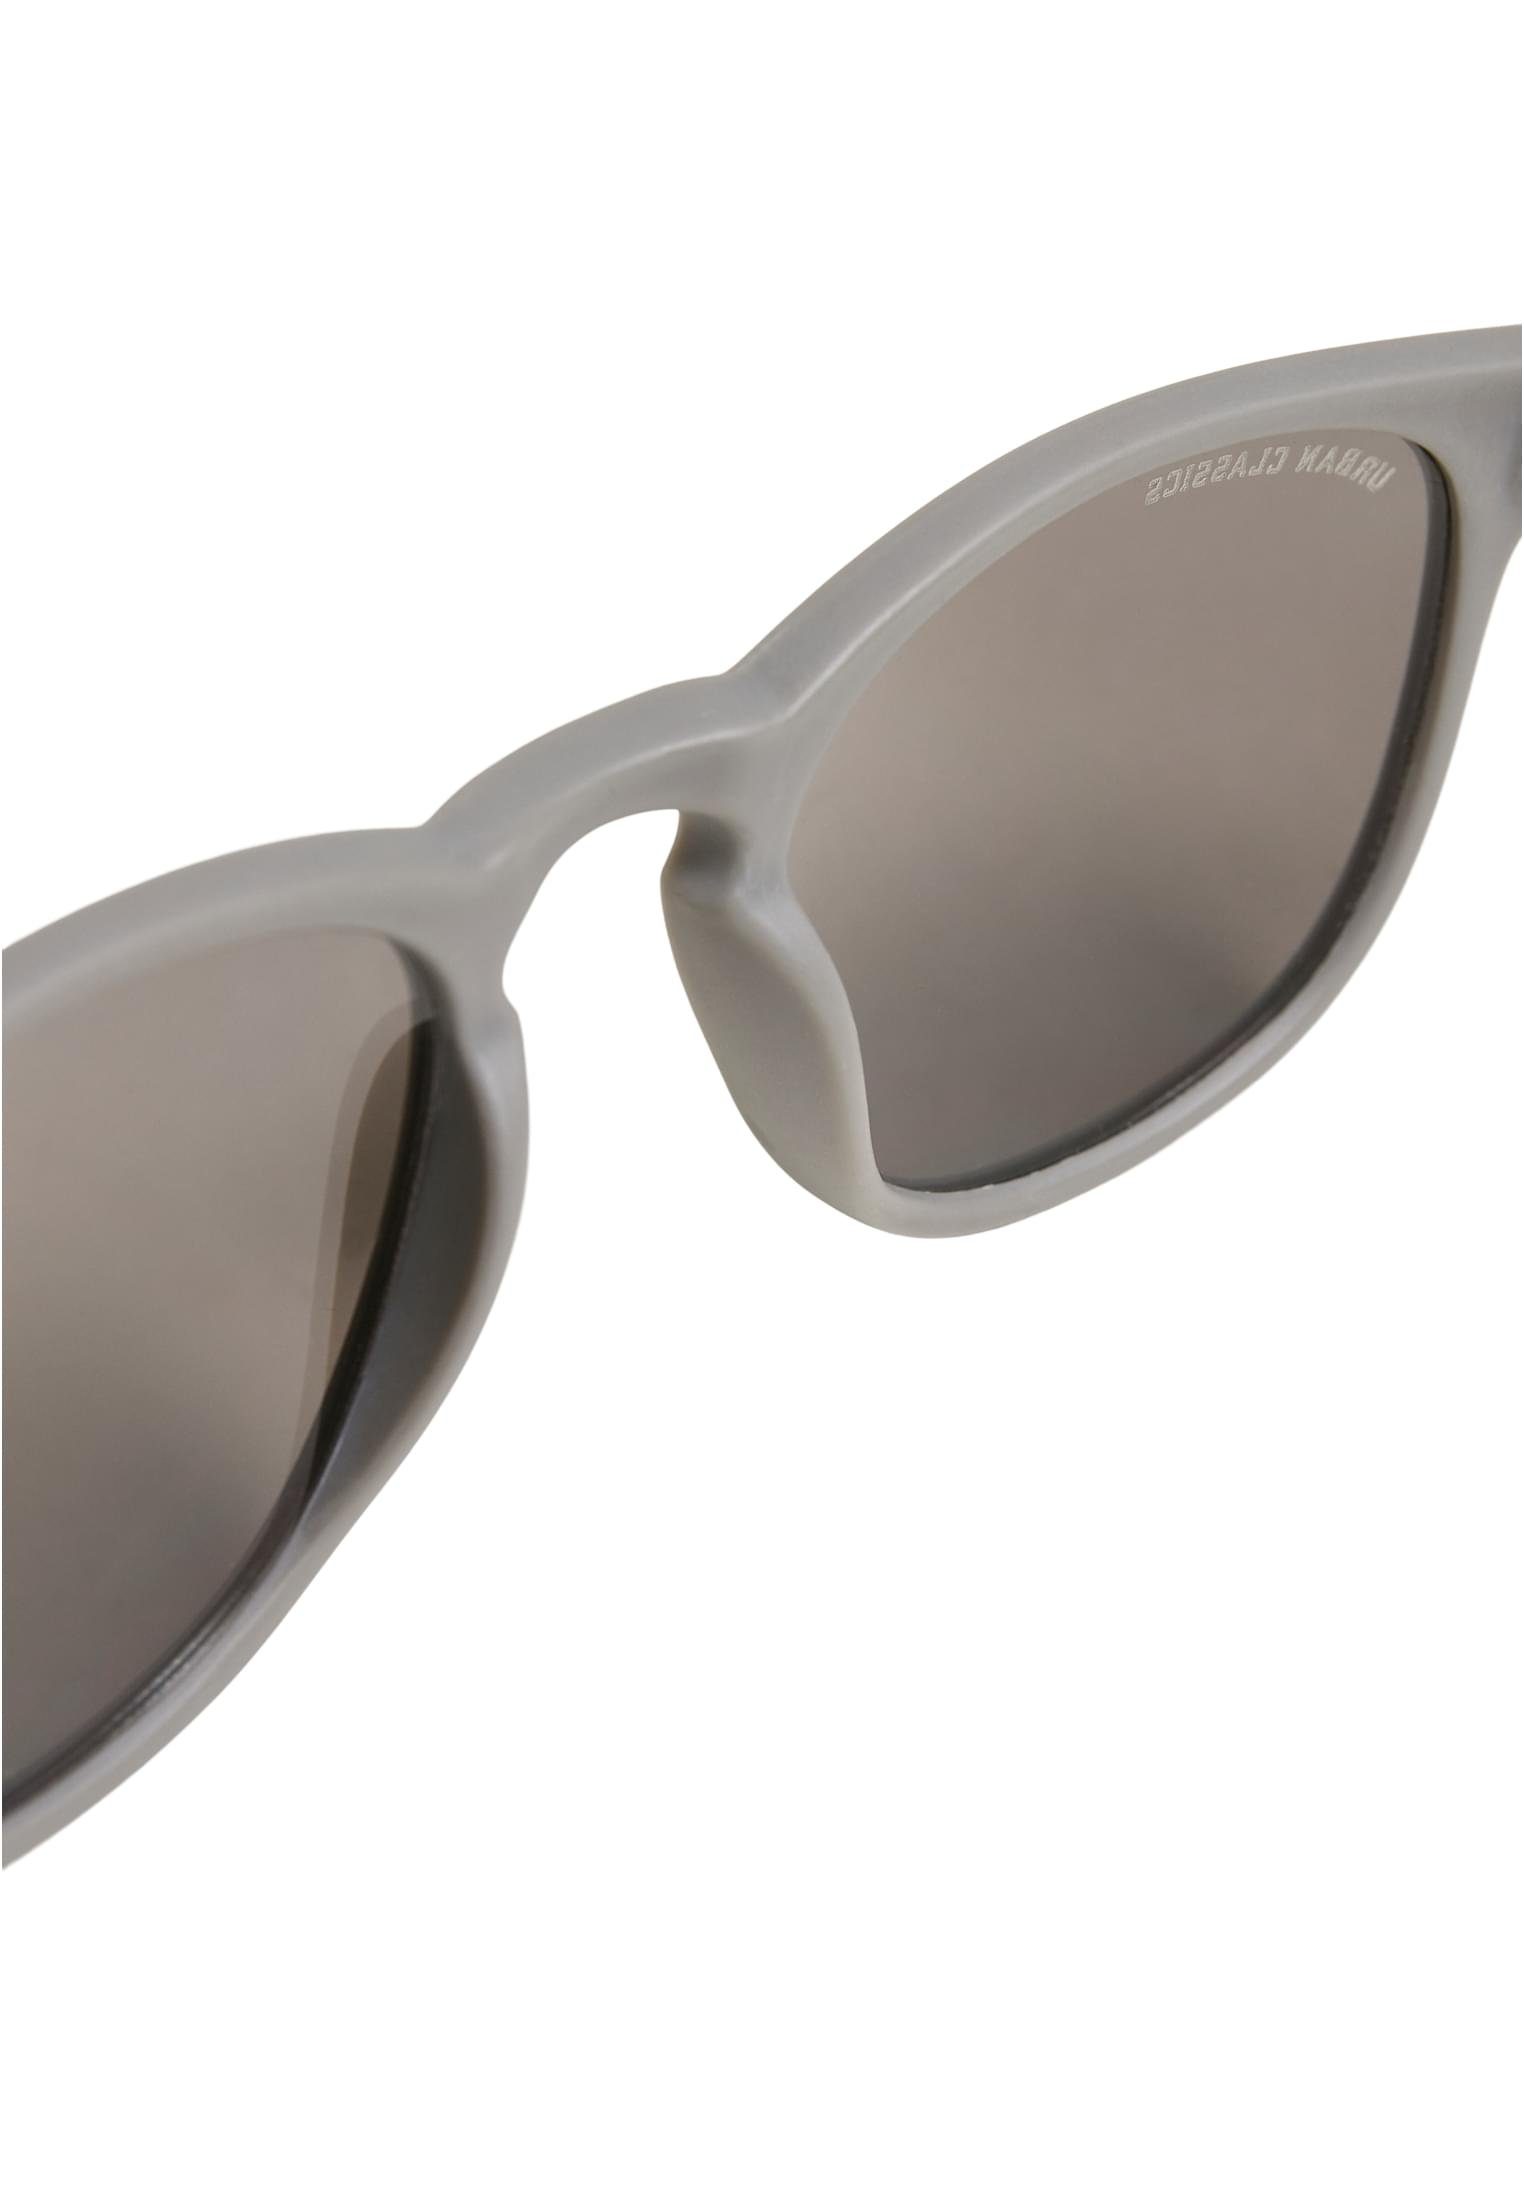 URBAN CLASSICS Sonnenbrille Unisex Arthur Chain with grey/silver Sunglasses